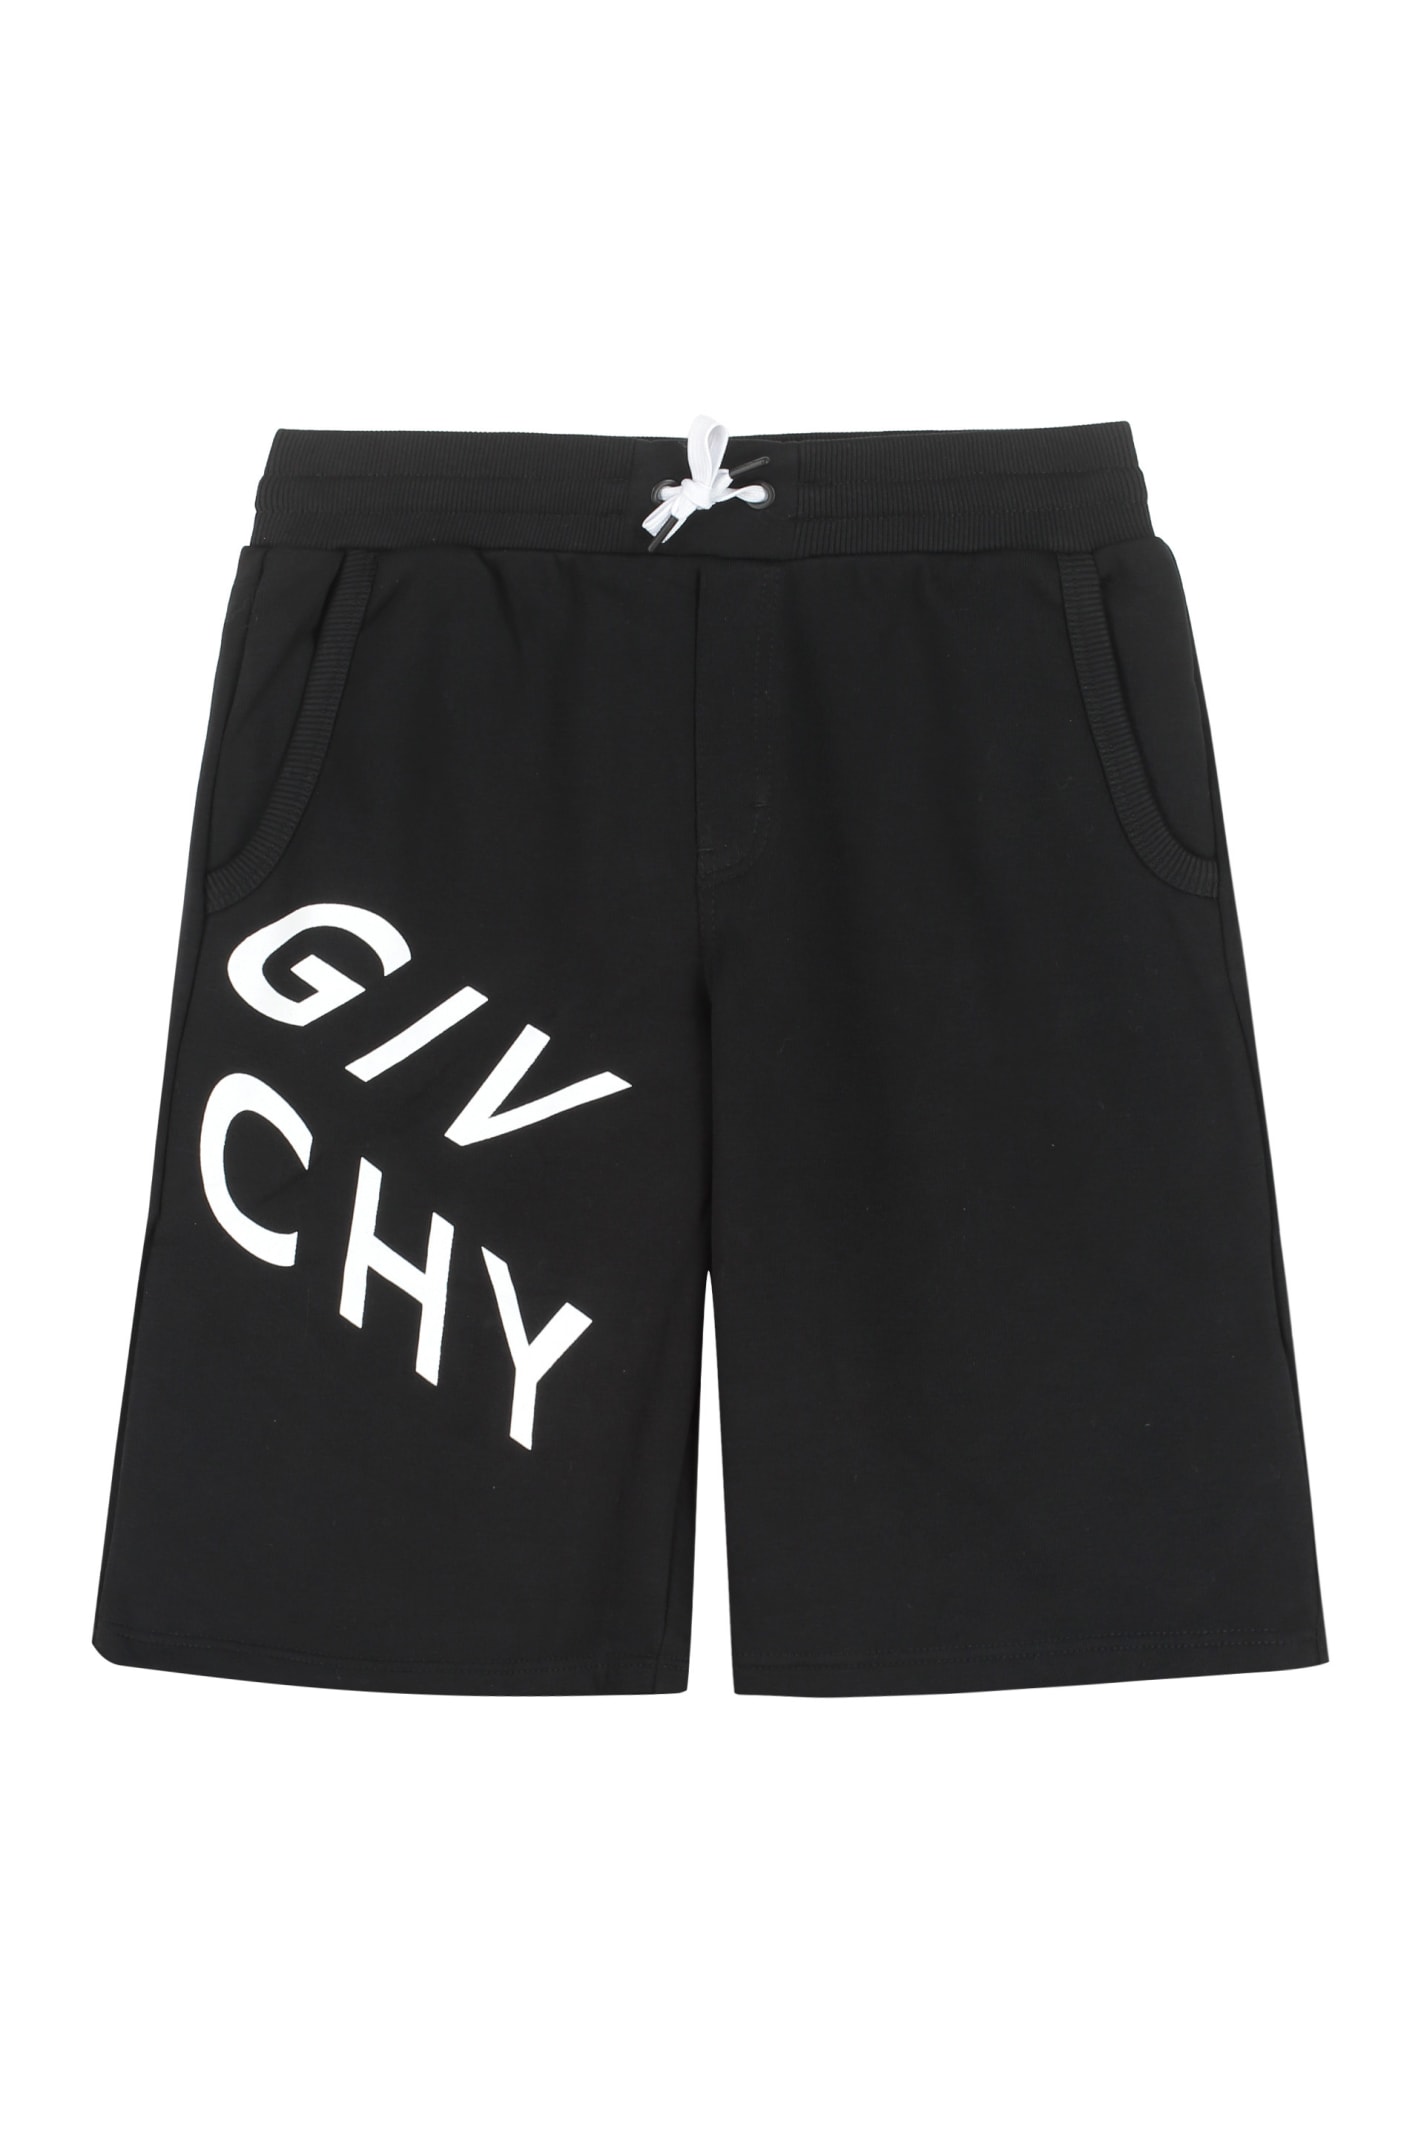 Givenchy Logo Print Track Shorts